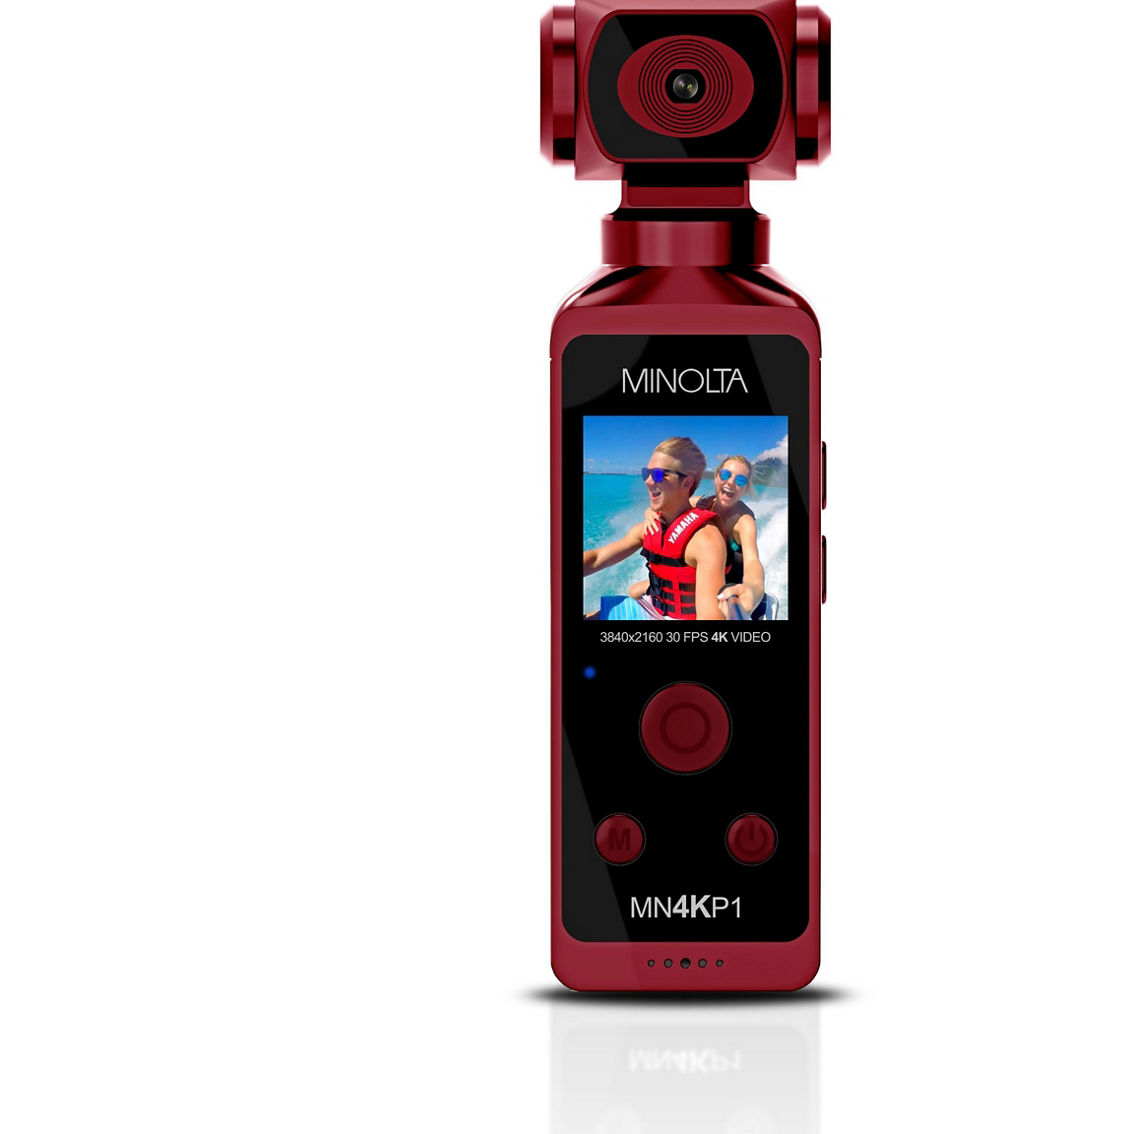 Minolta MN4KP1 4K Ultra HD Pocket Camcorder with WiFi & Waterproof Case - Image 2 of 4